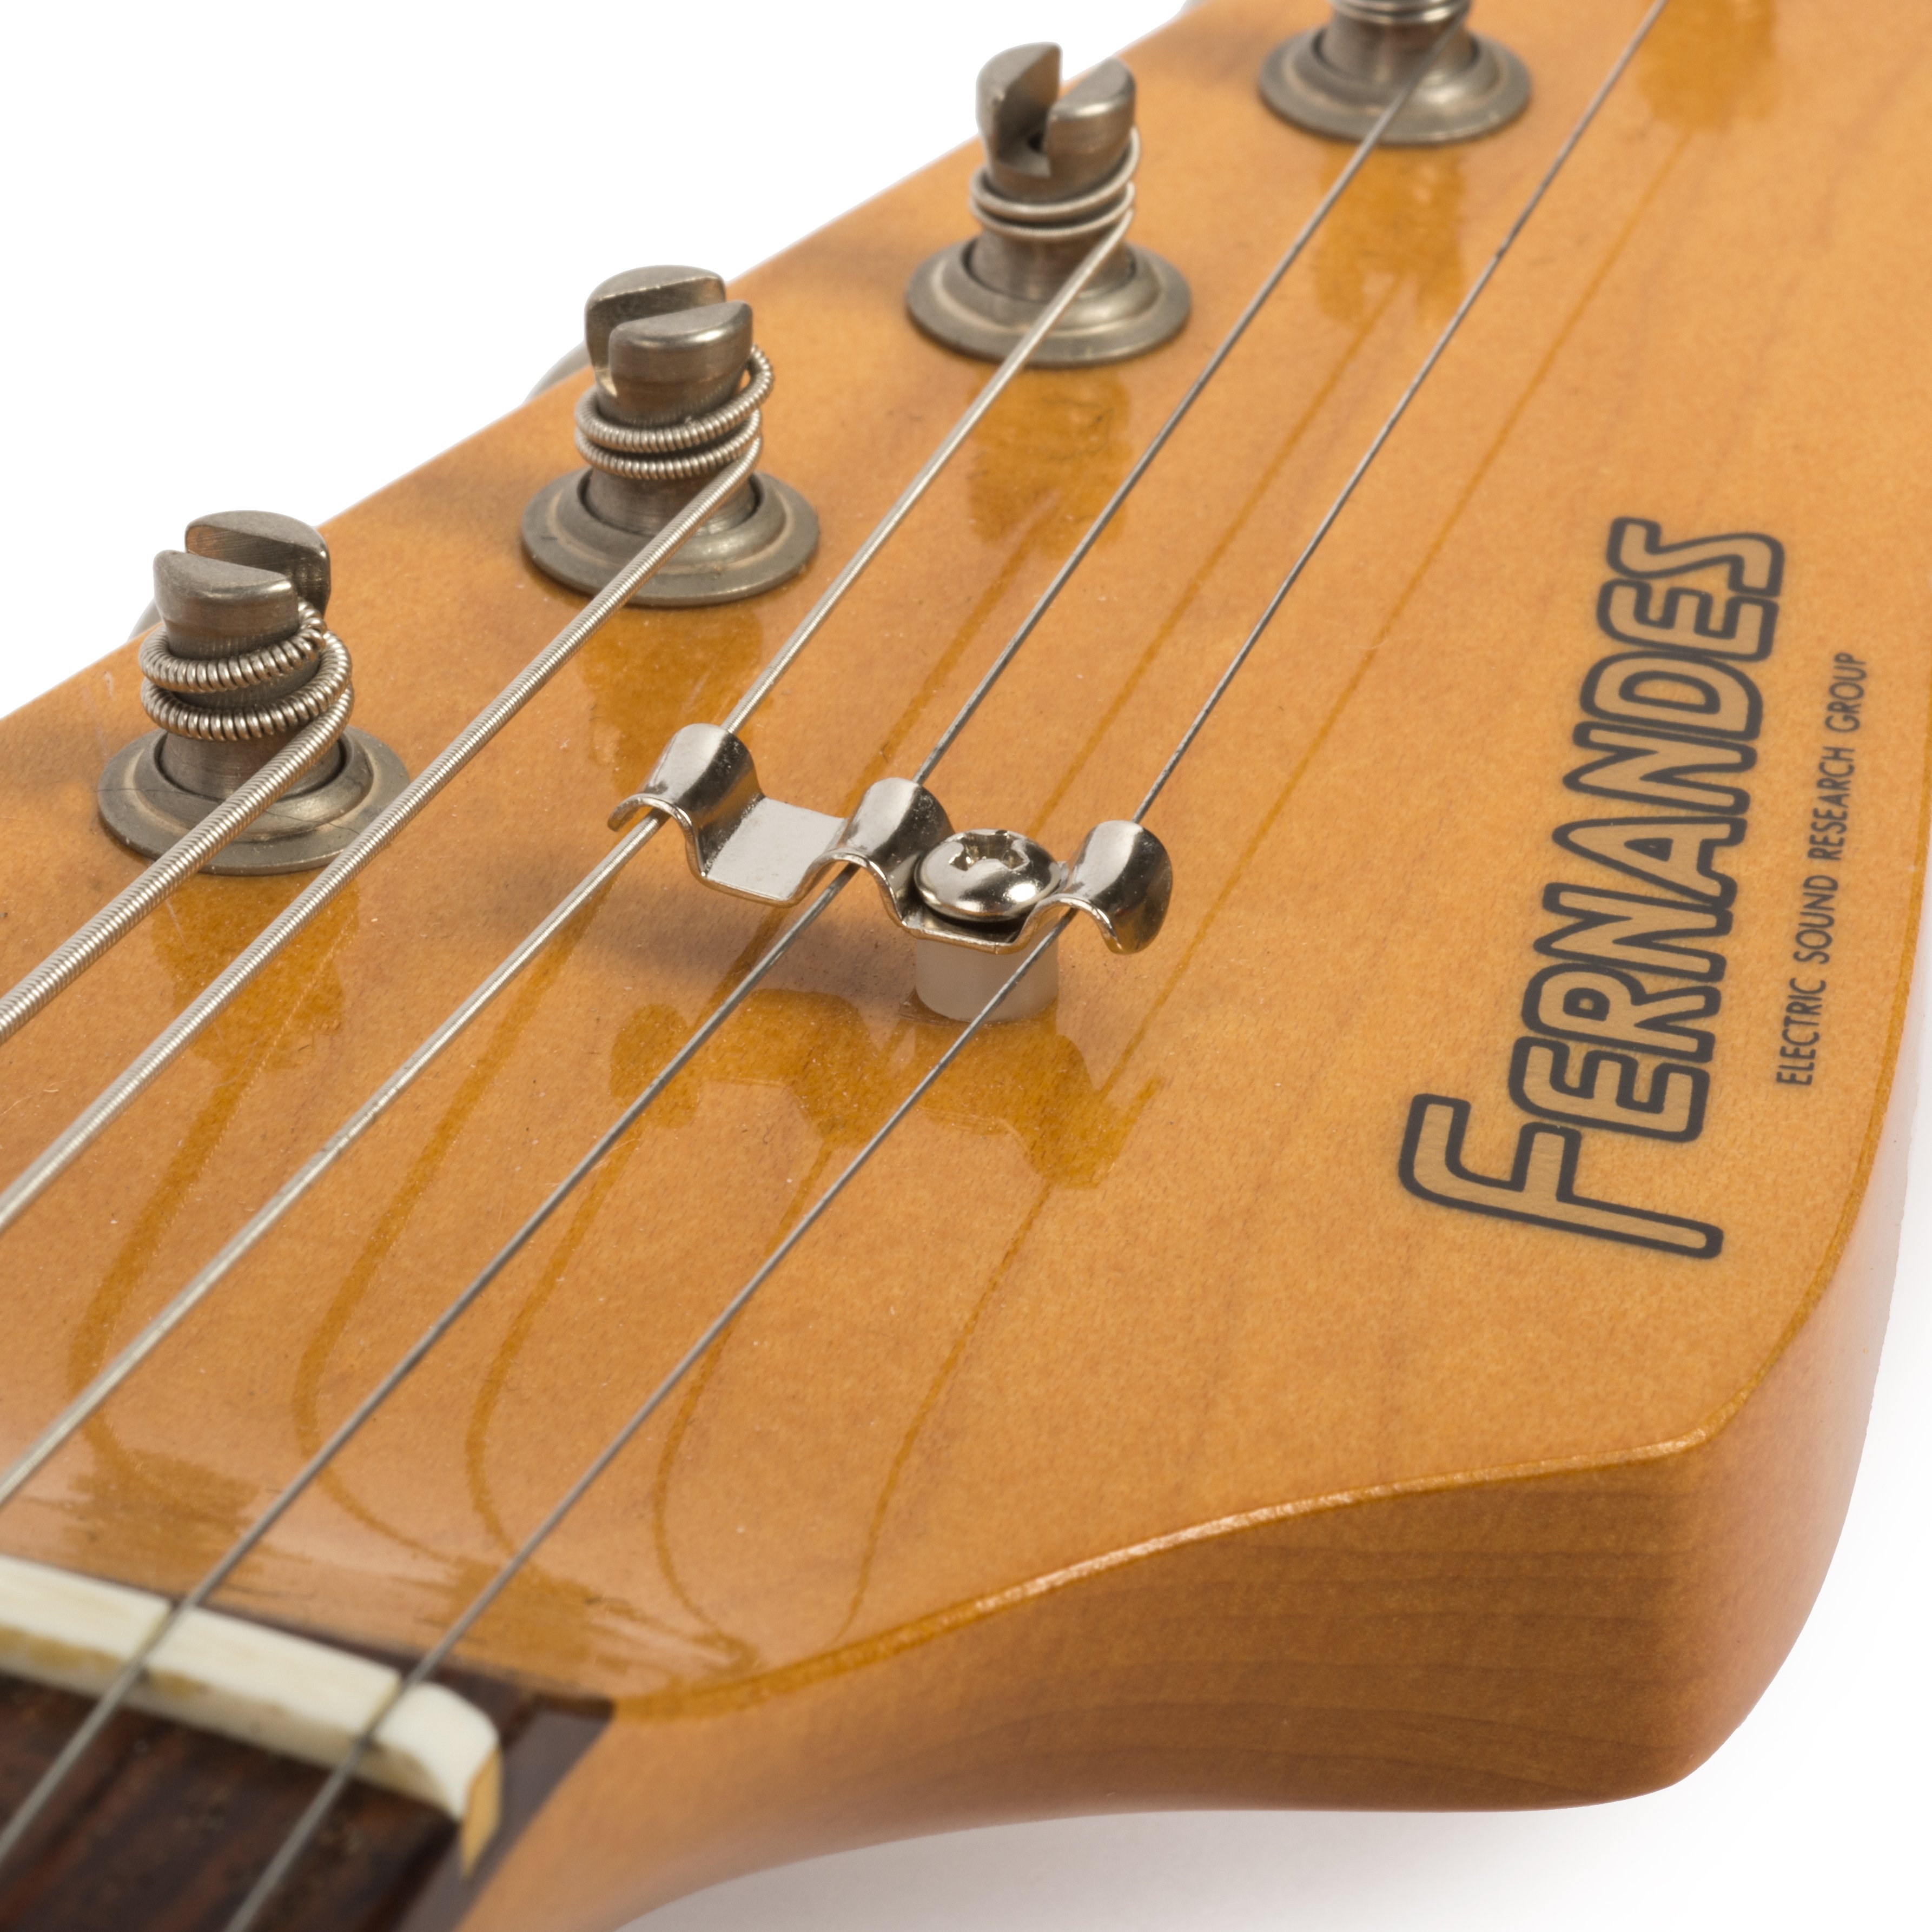 Squier Stratocaster Hardware Upgrade Kit